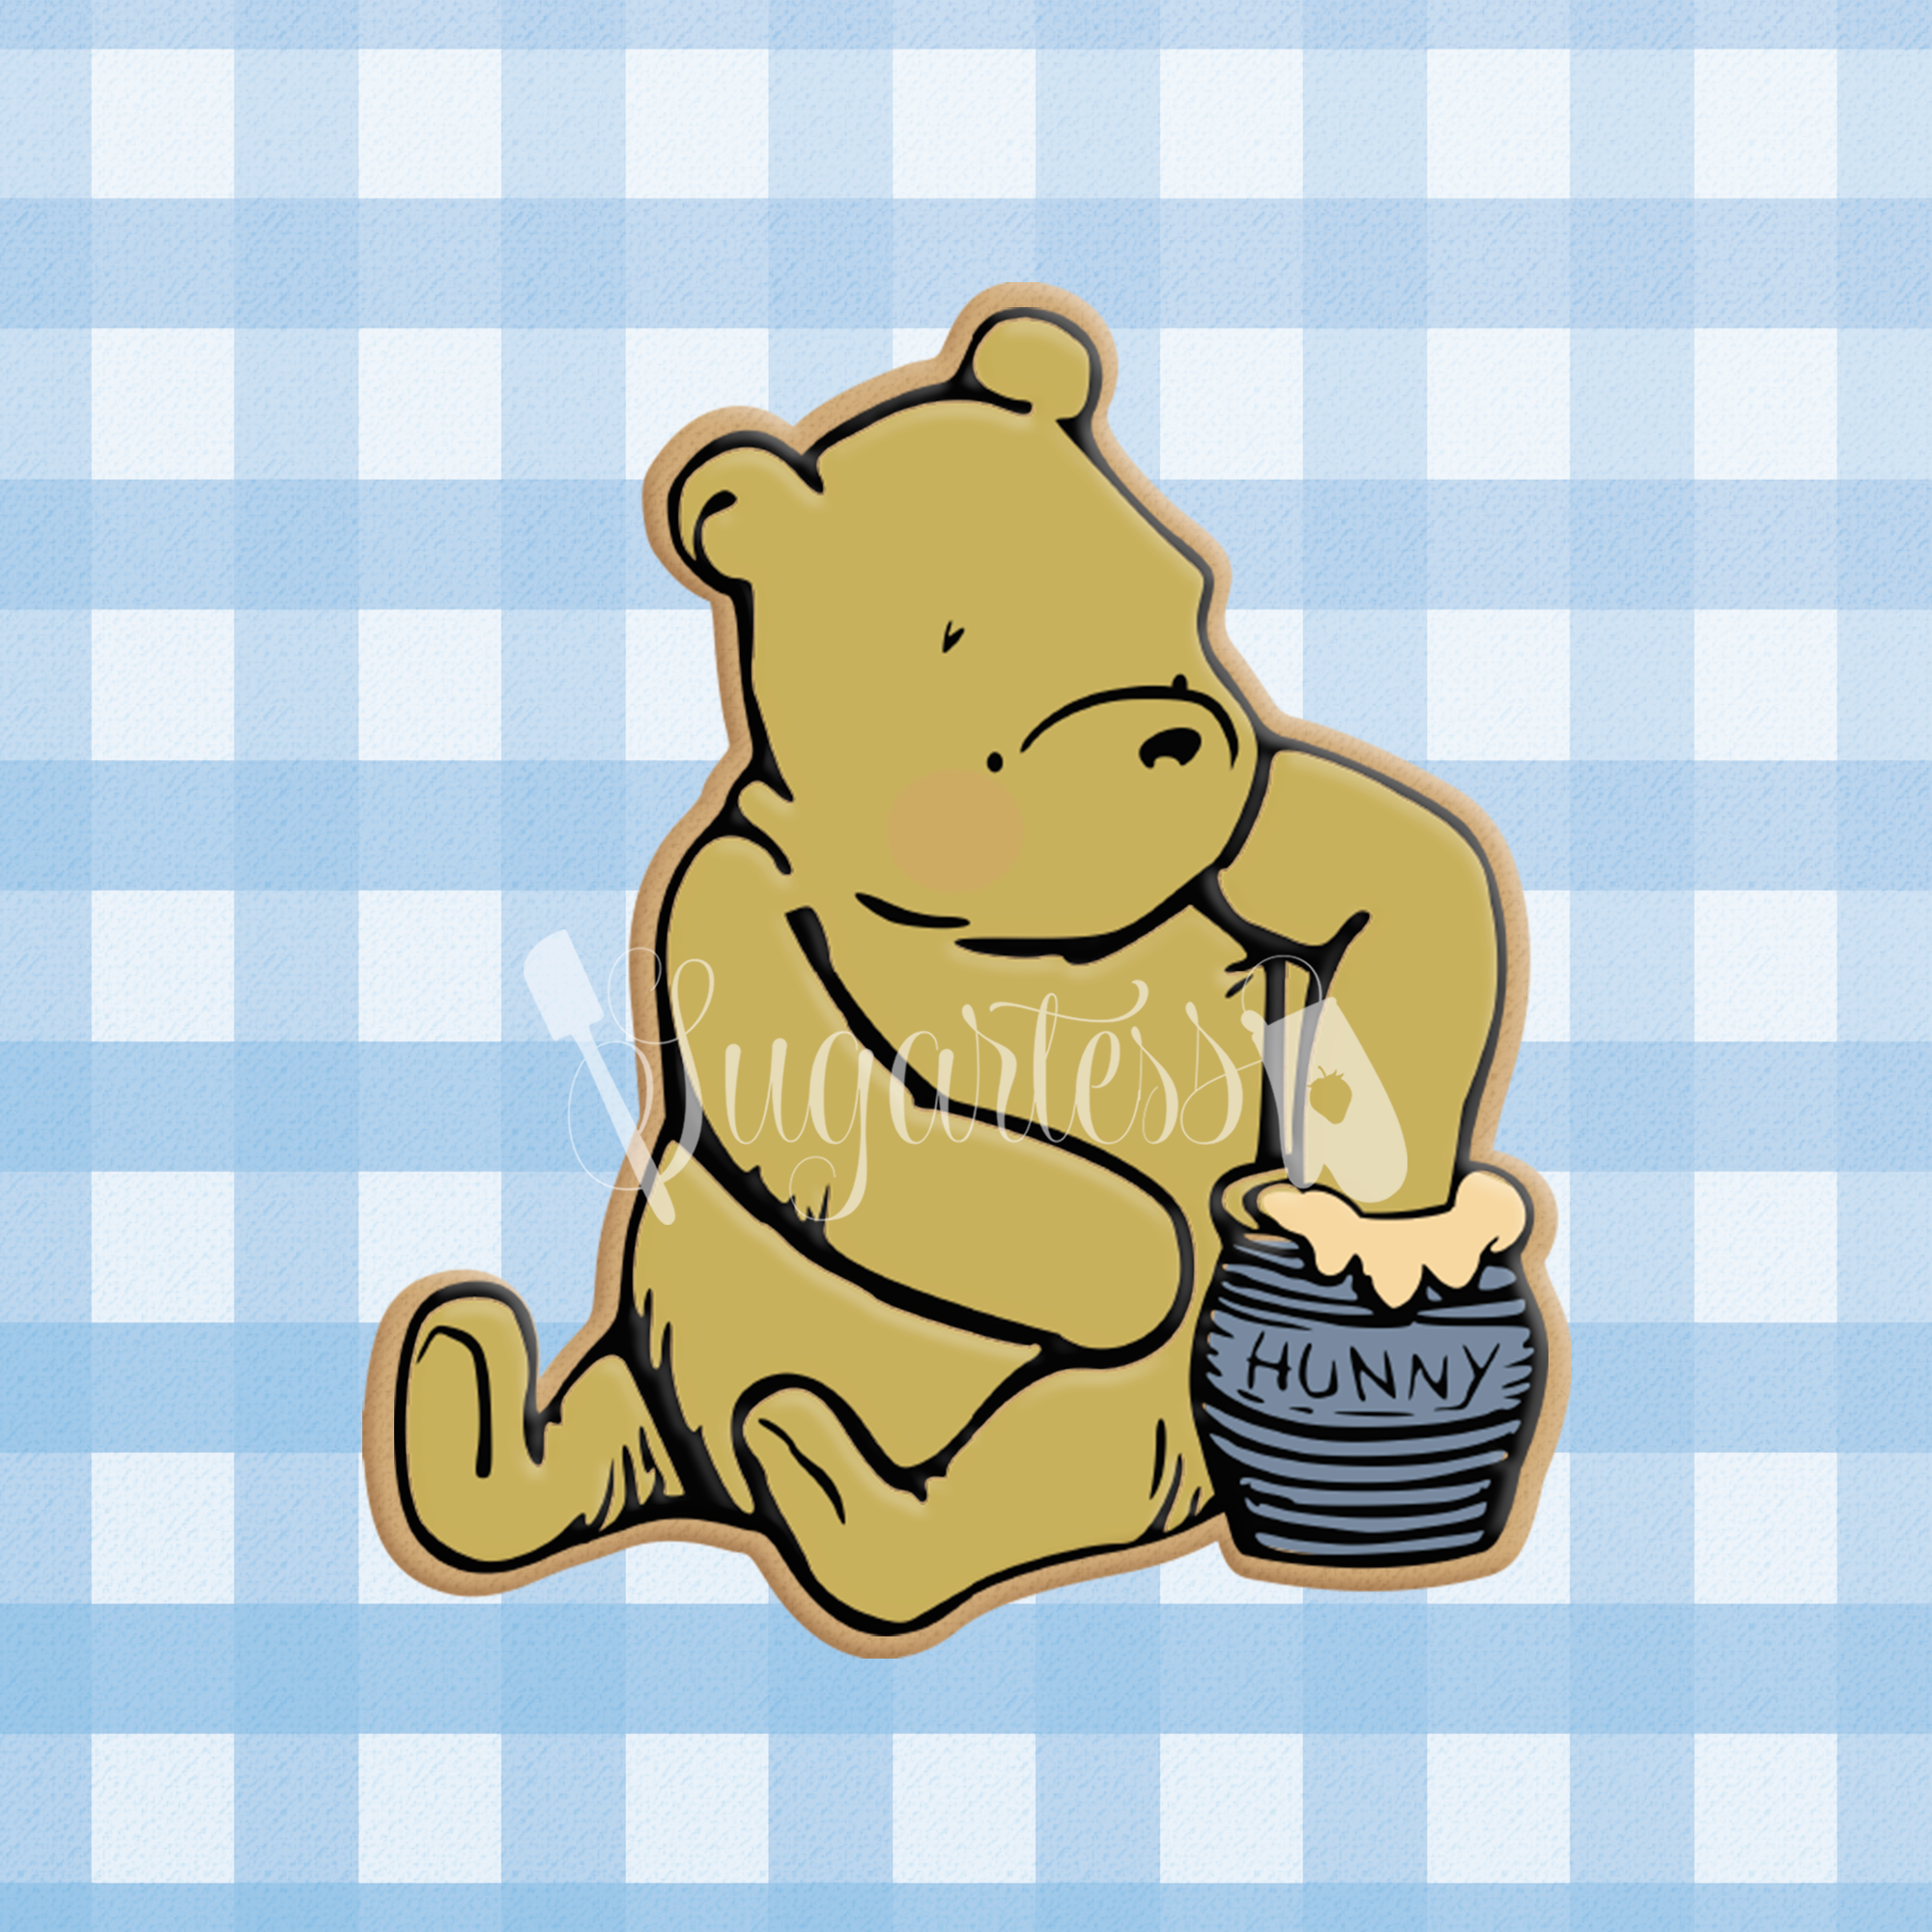 classic winnie the pooh honey pot